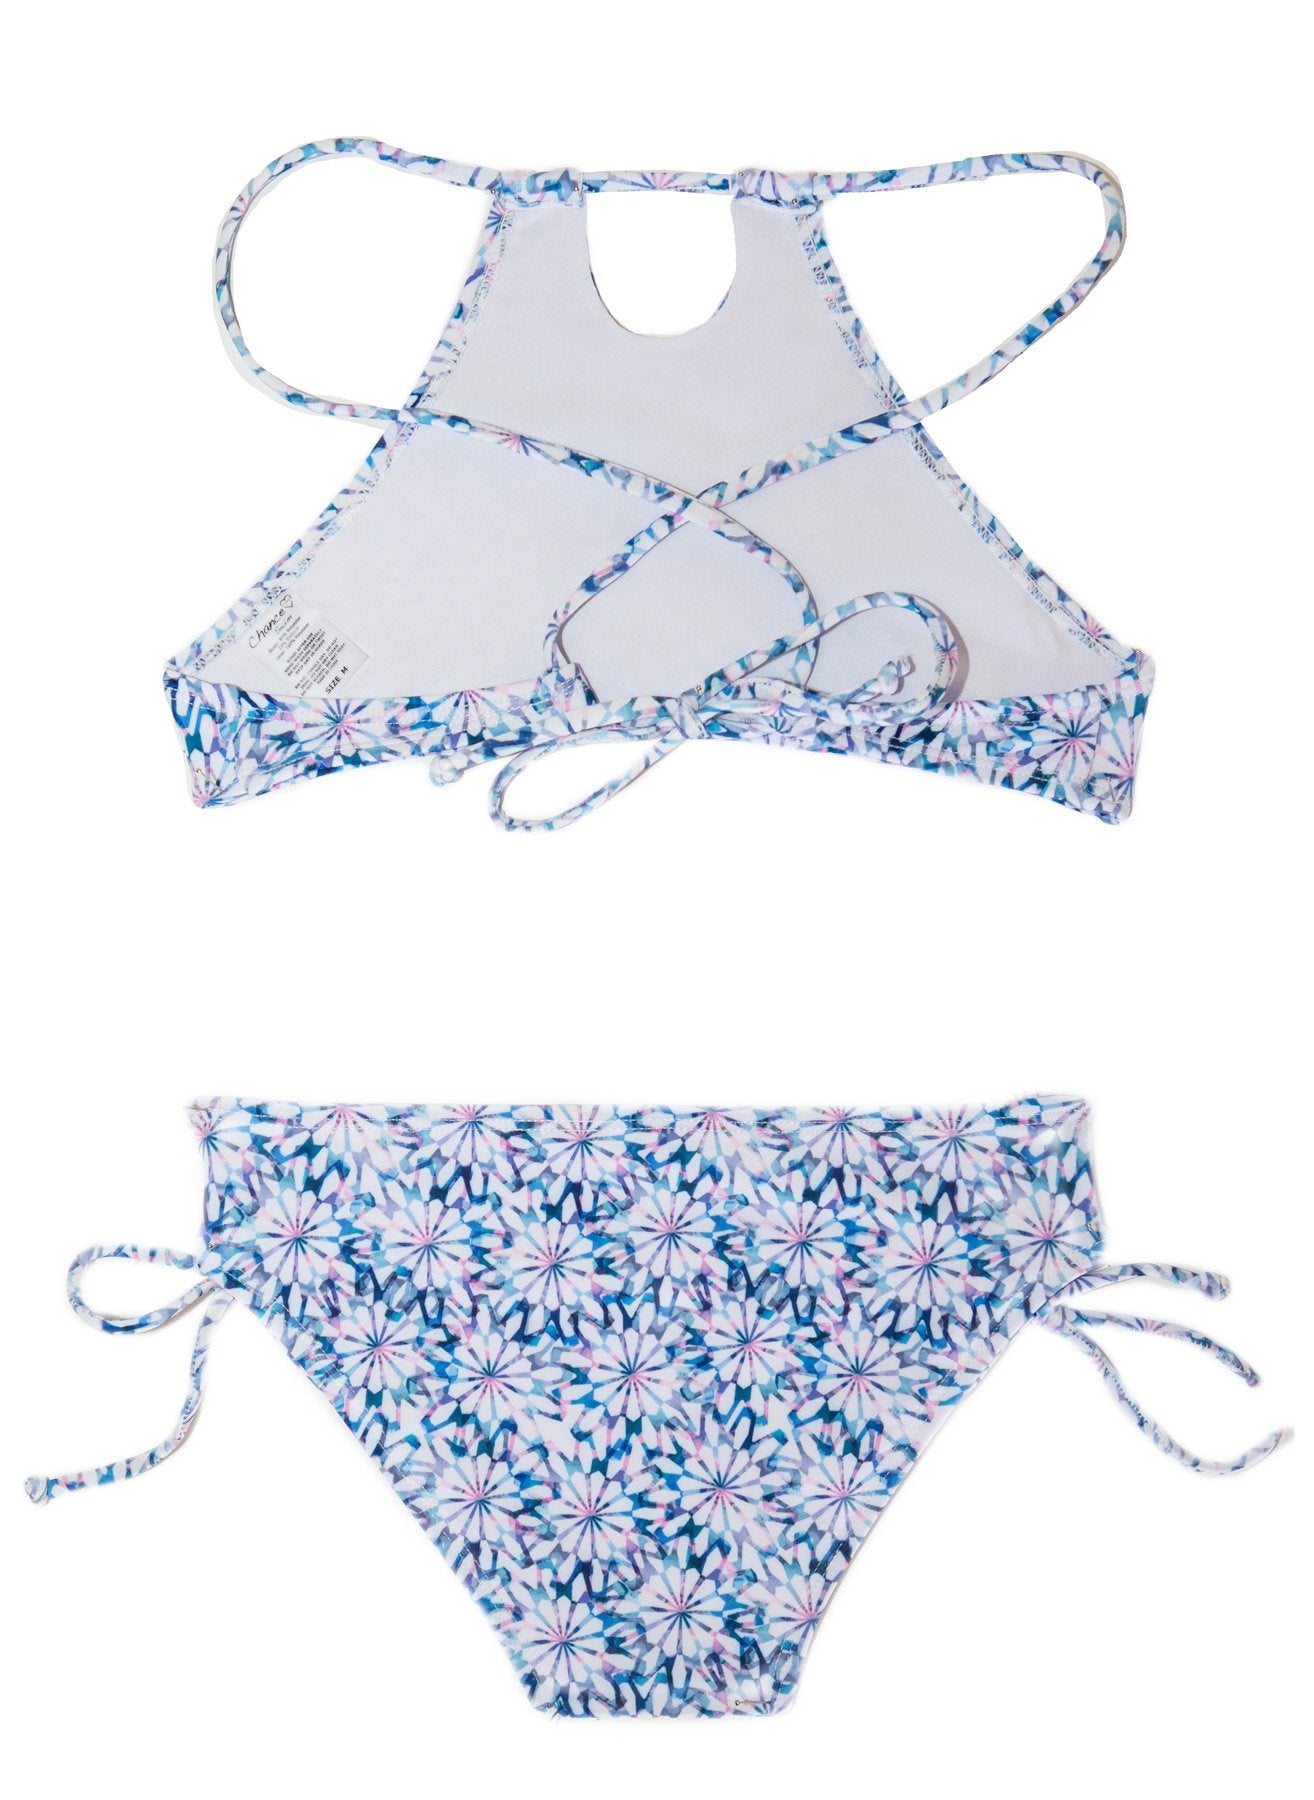 Daisy Blue Girls Bikini Set with Halter Top - Chance Loves Swimwear